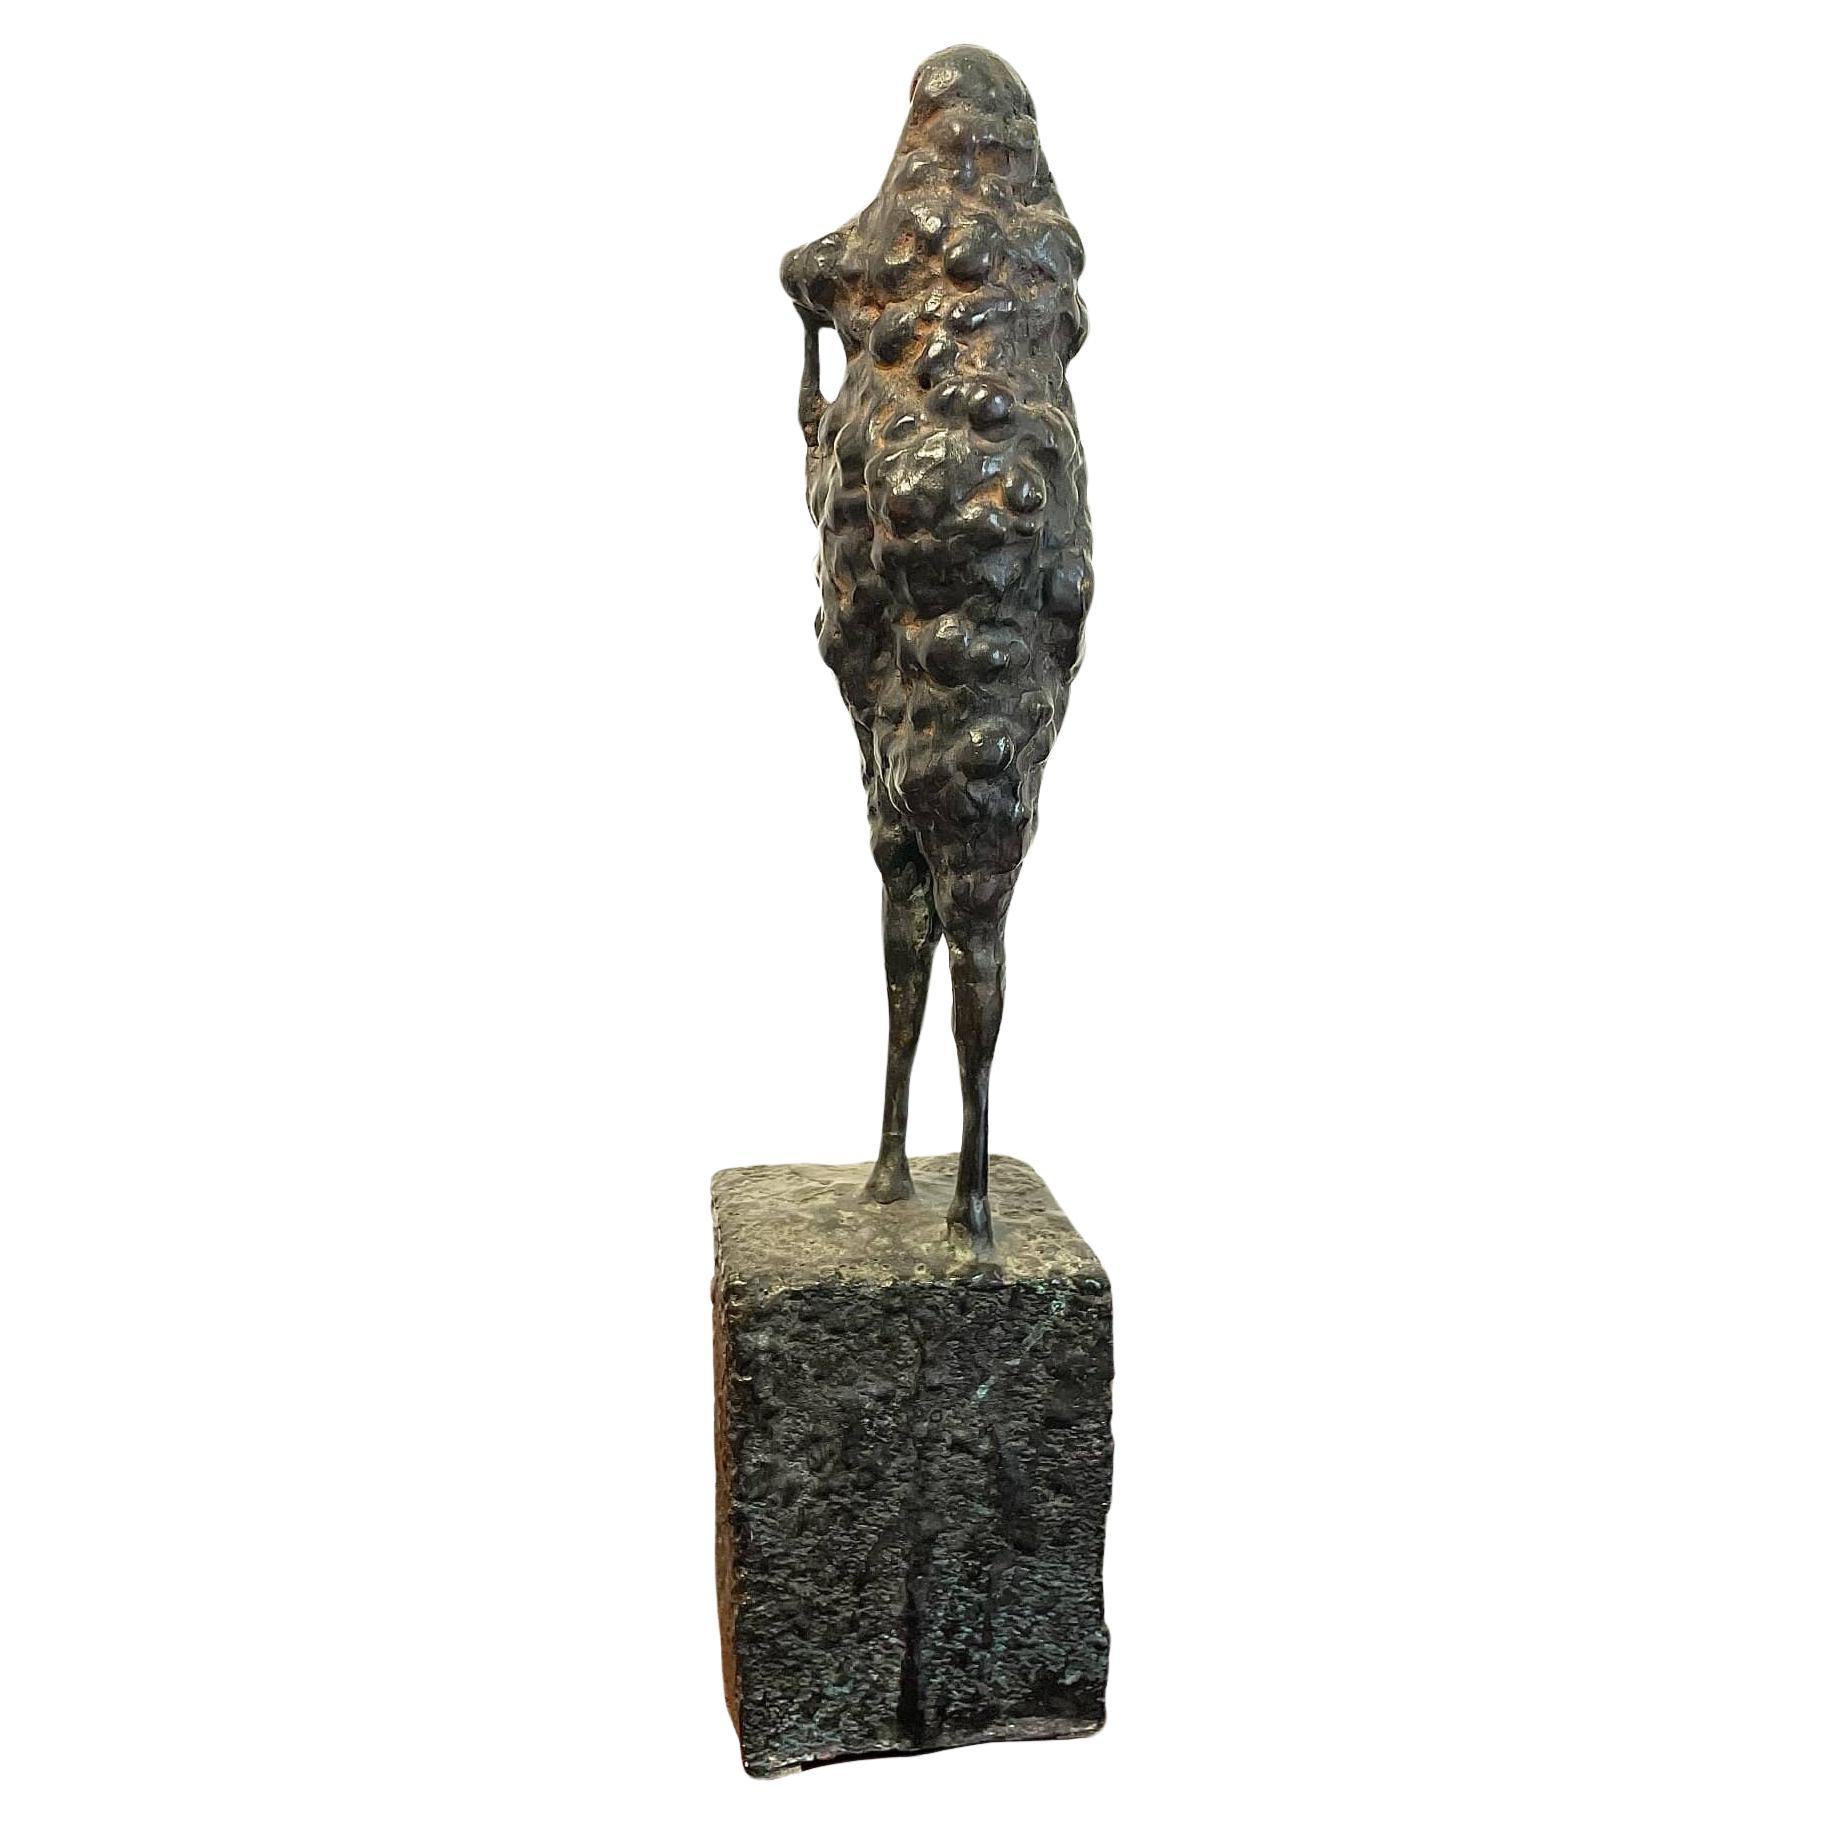 Bronze sculpture "Figure de roche V" by Paul de Pignol, 2009